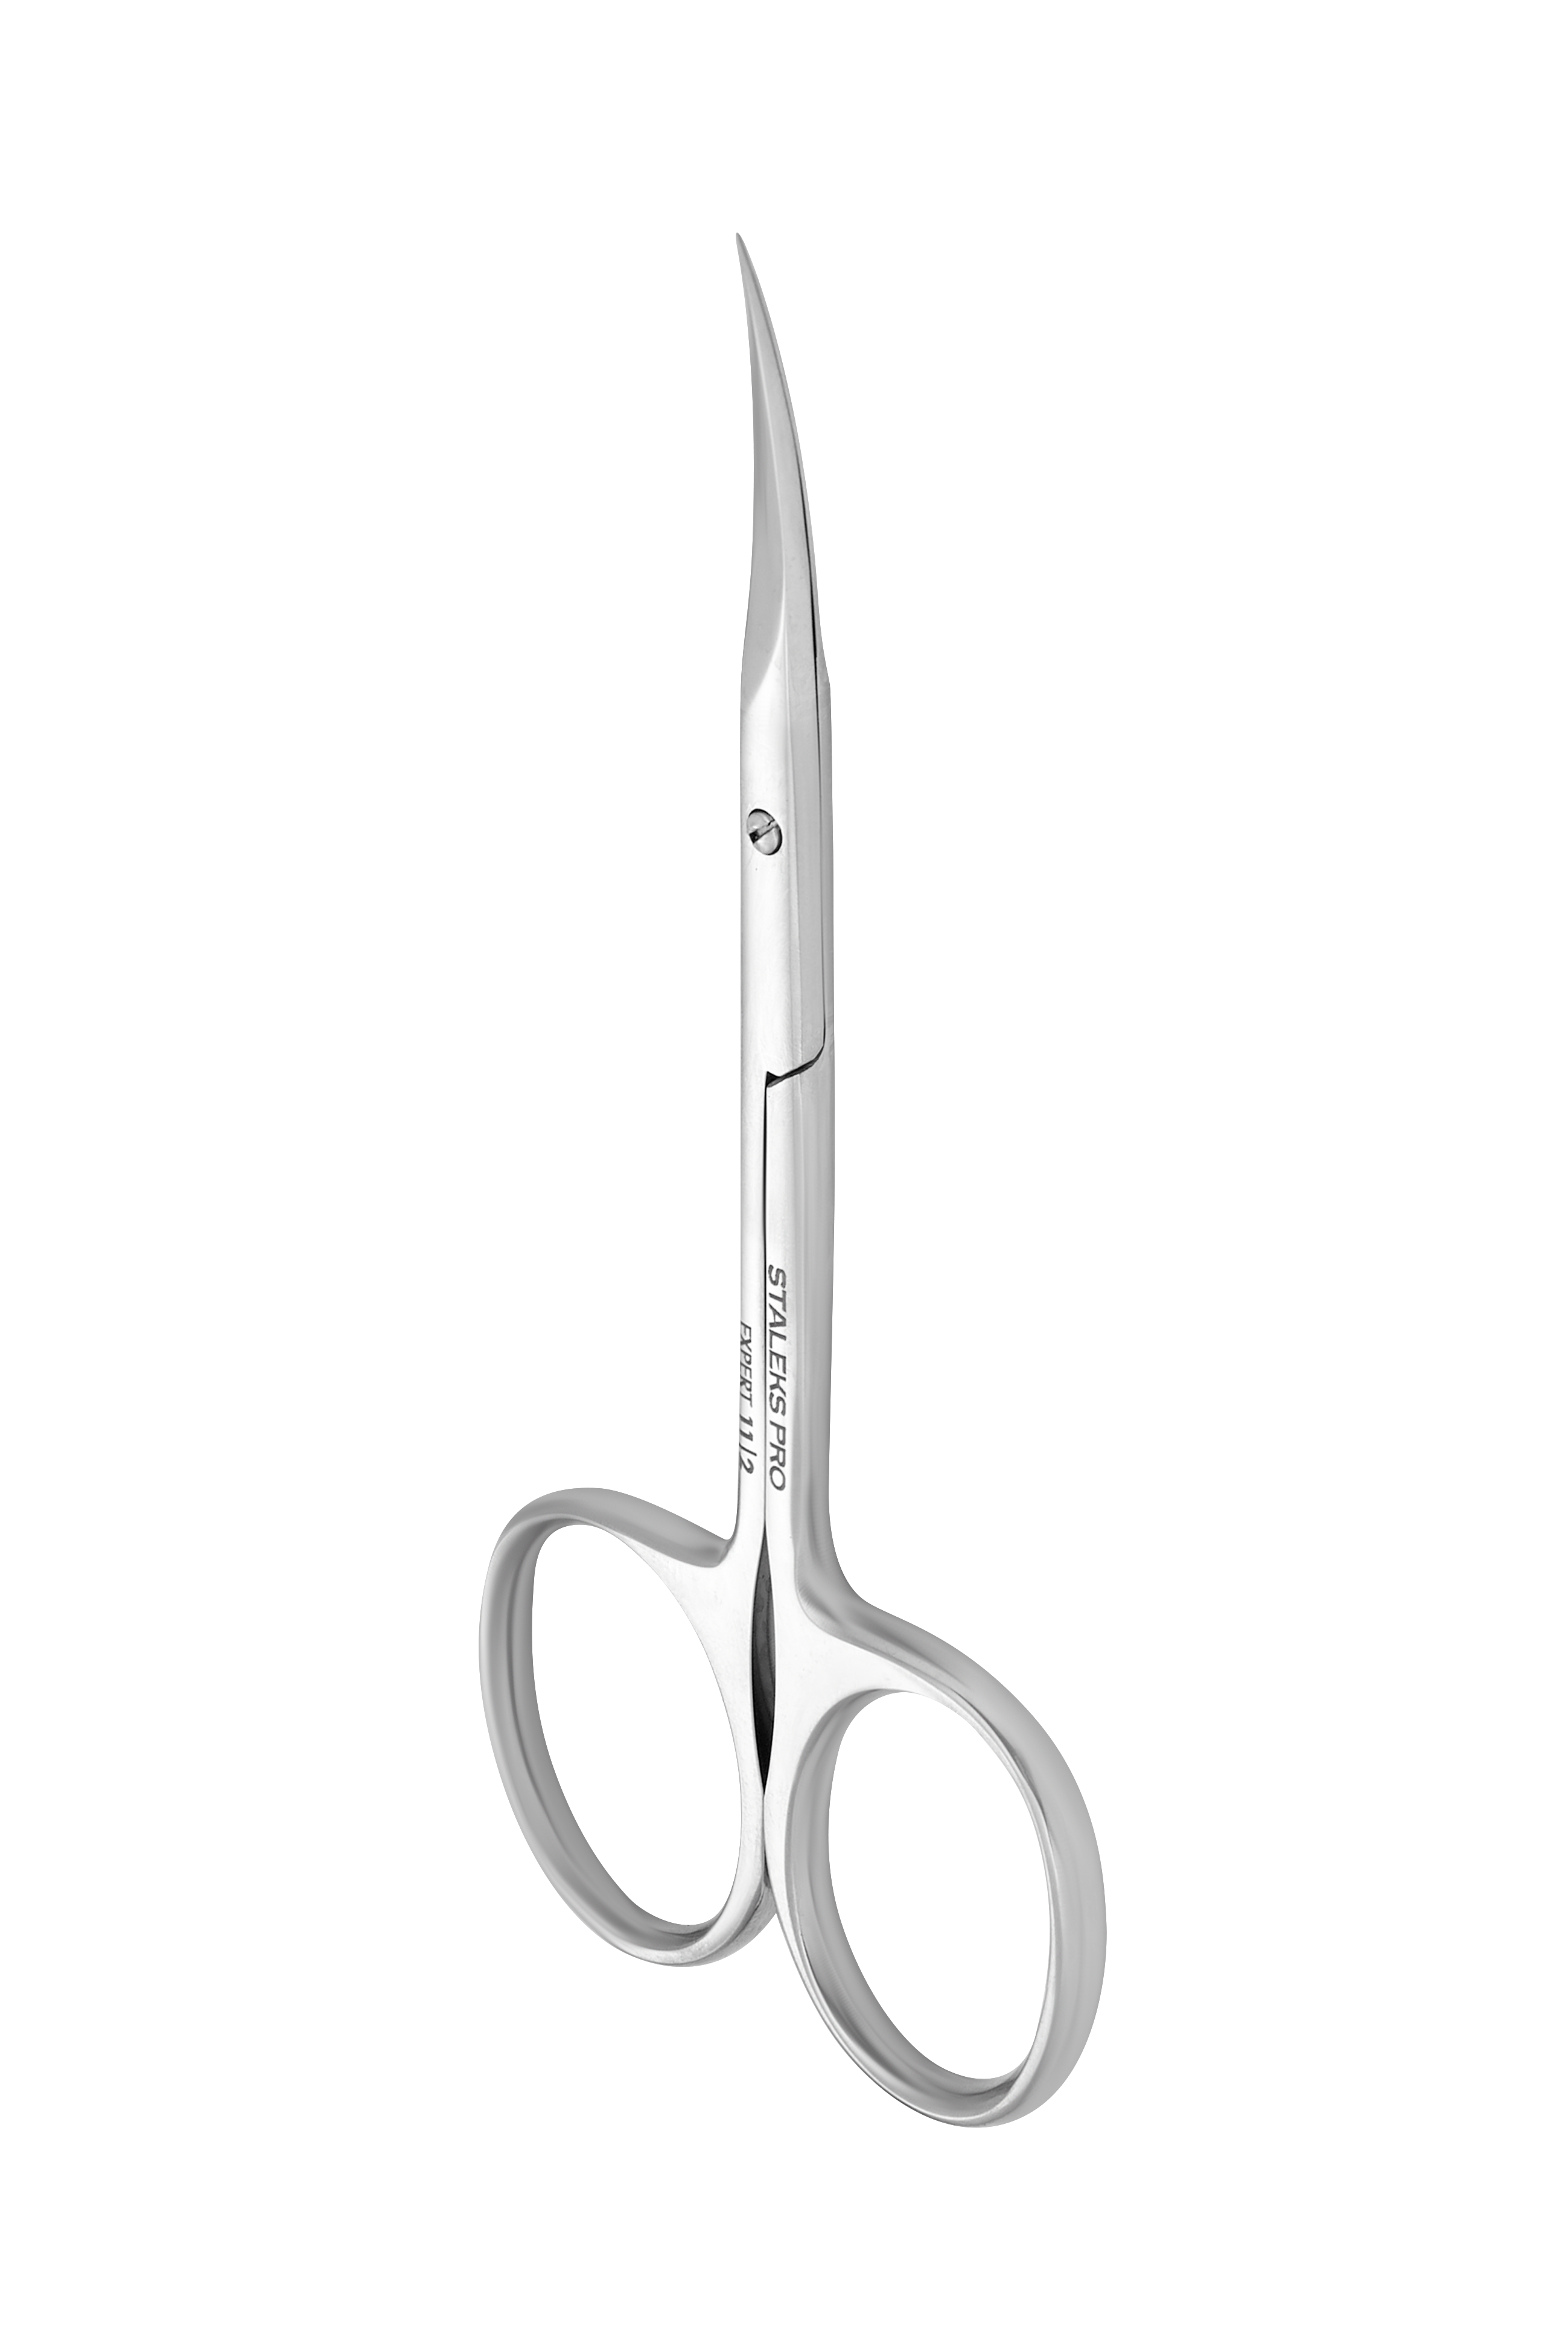 Staleks Pro Expert 11 Type 2 Cuticle Scissors (Left Handed) SE-11/2